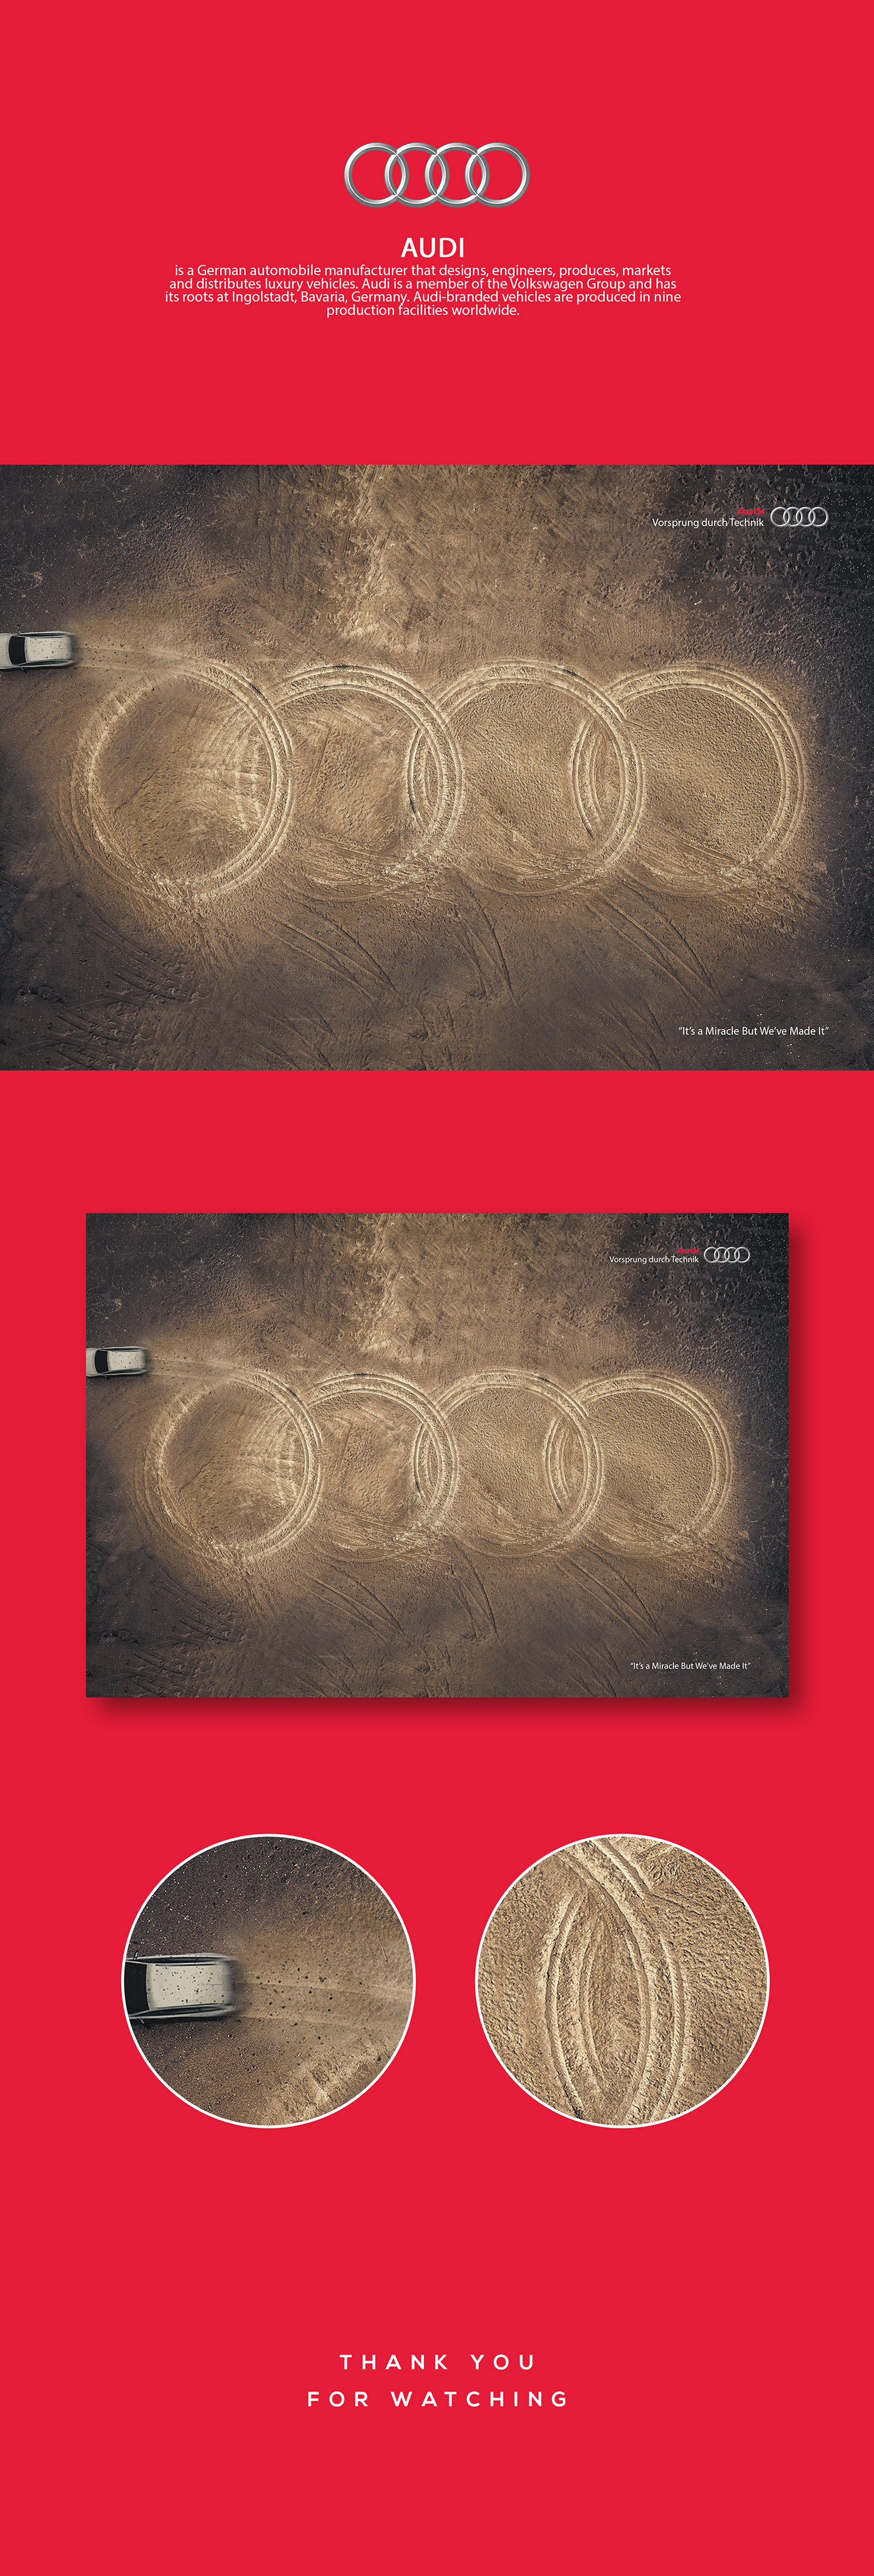 Audi car poster drifting visual ads adobe photoshop creative Mockup